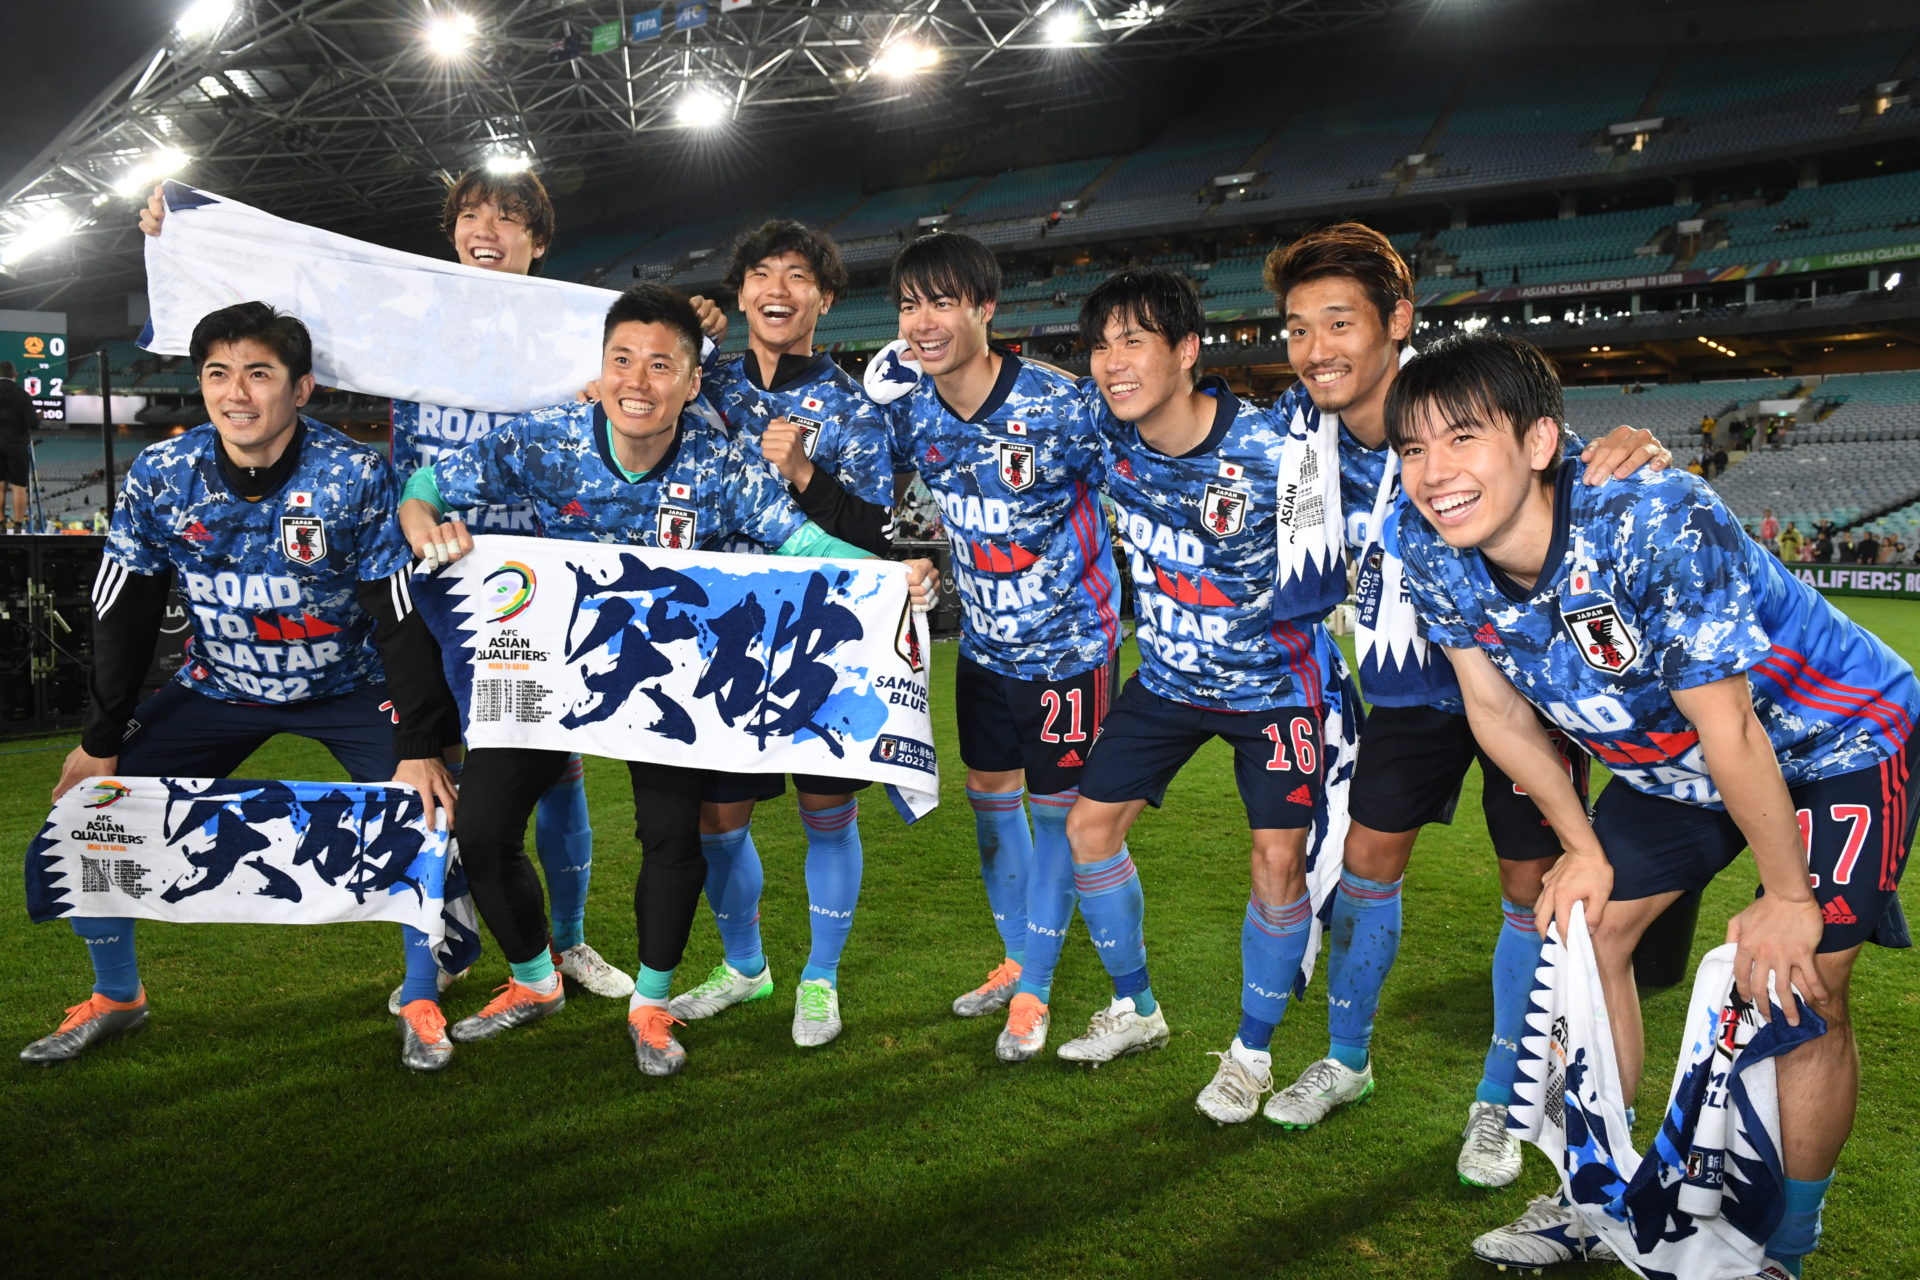 Hatate celebrates with his Japan team-mates